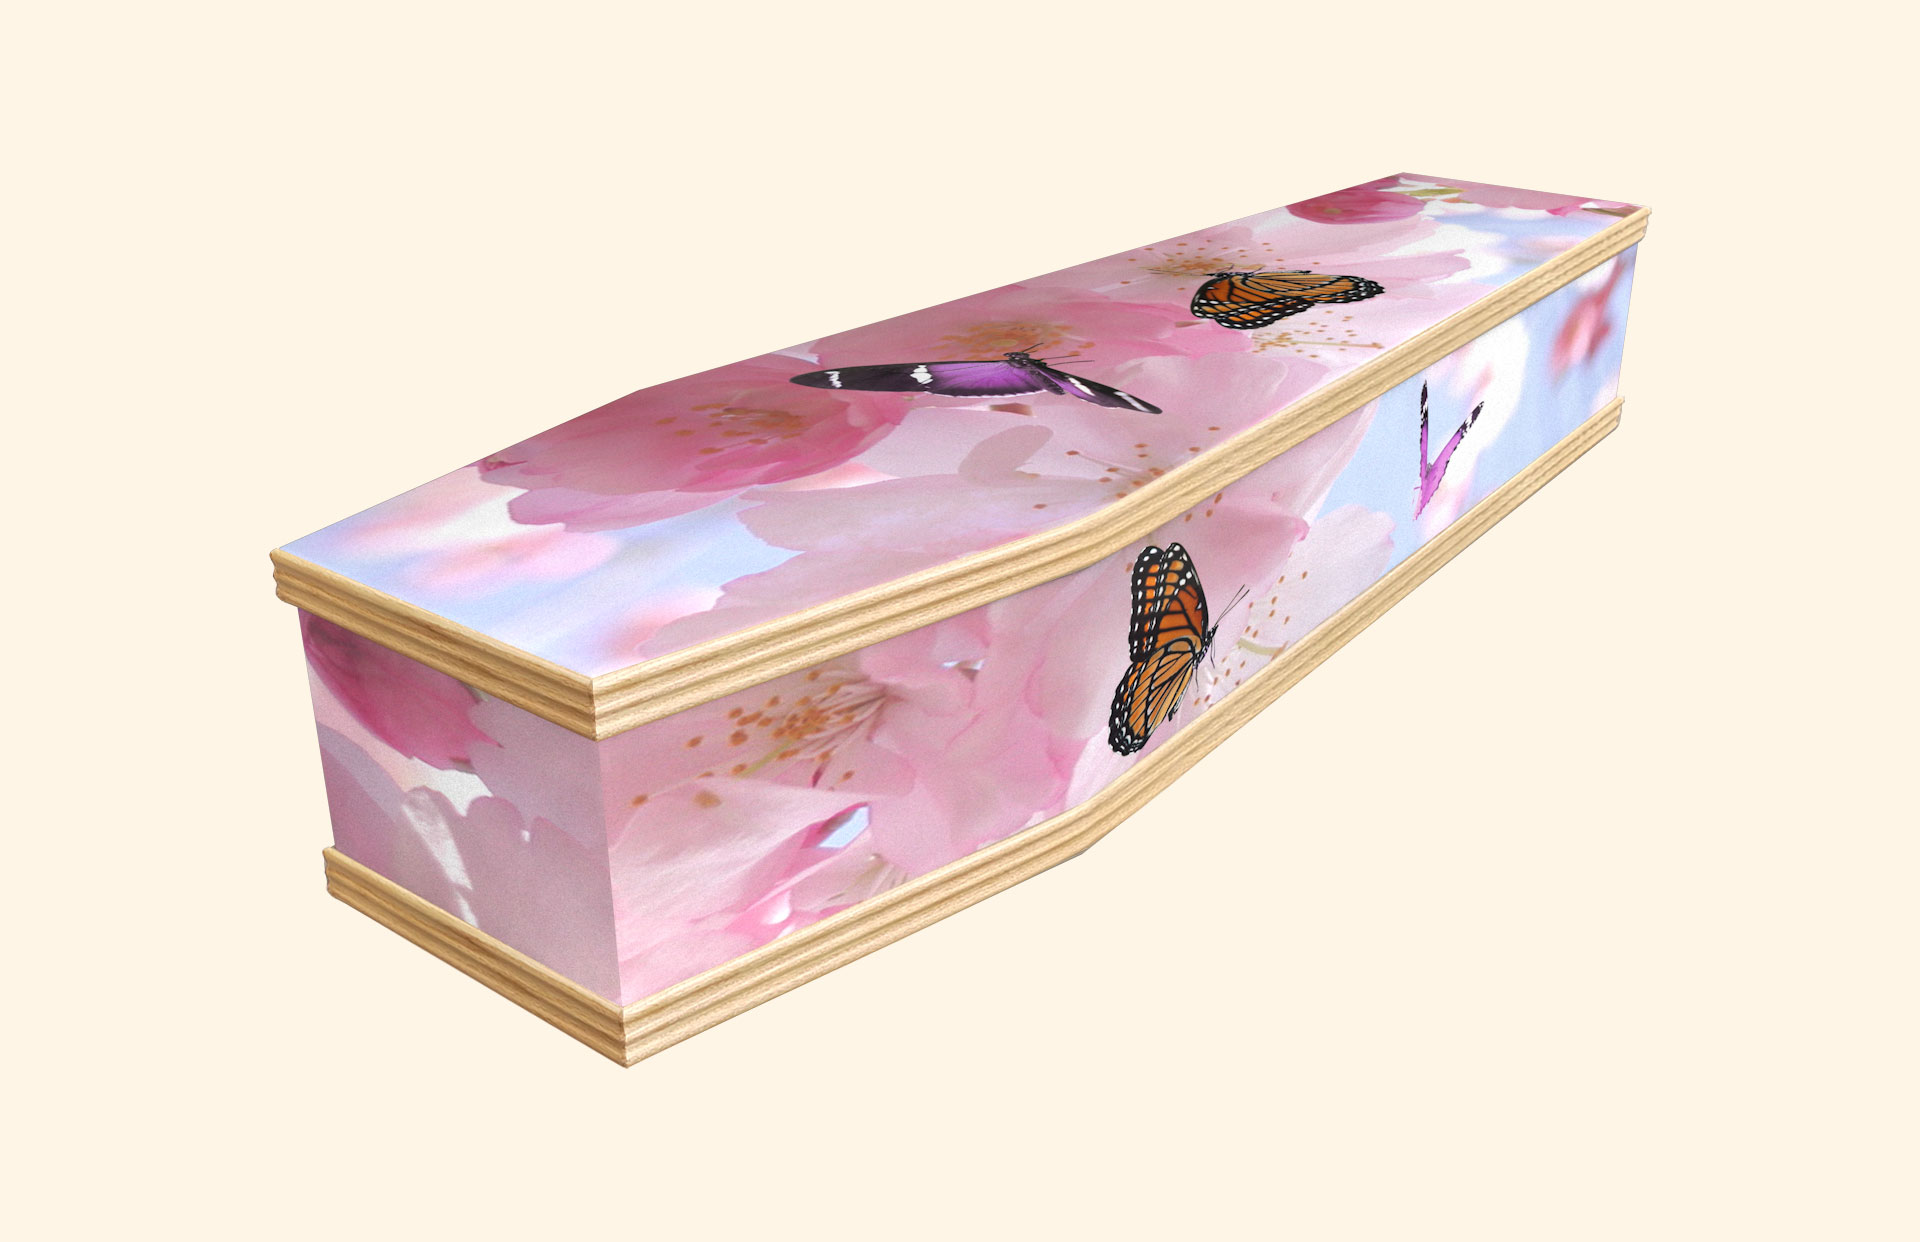 Grace design on a classic coffin